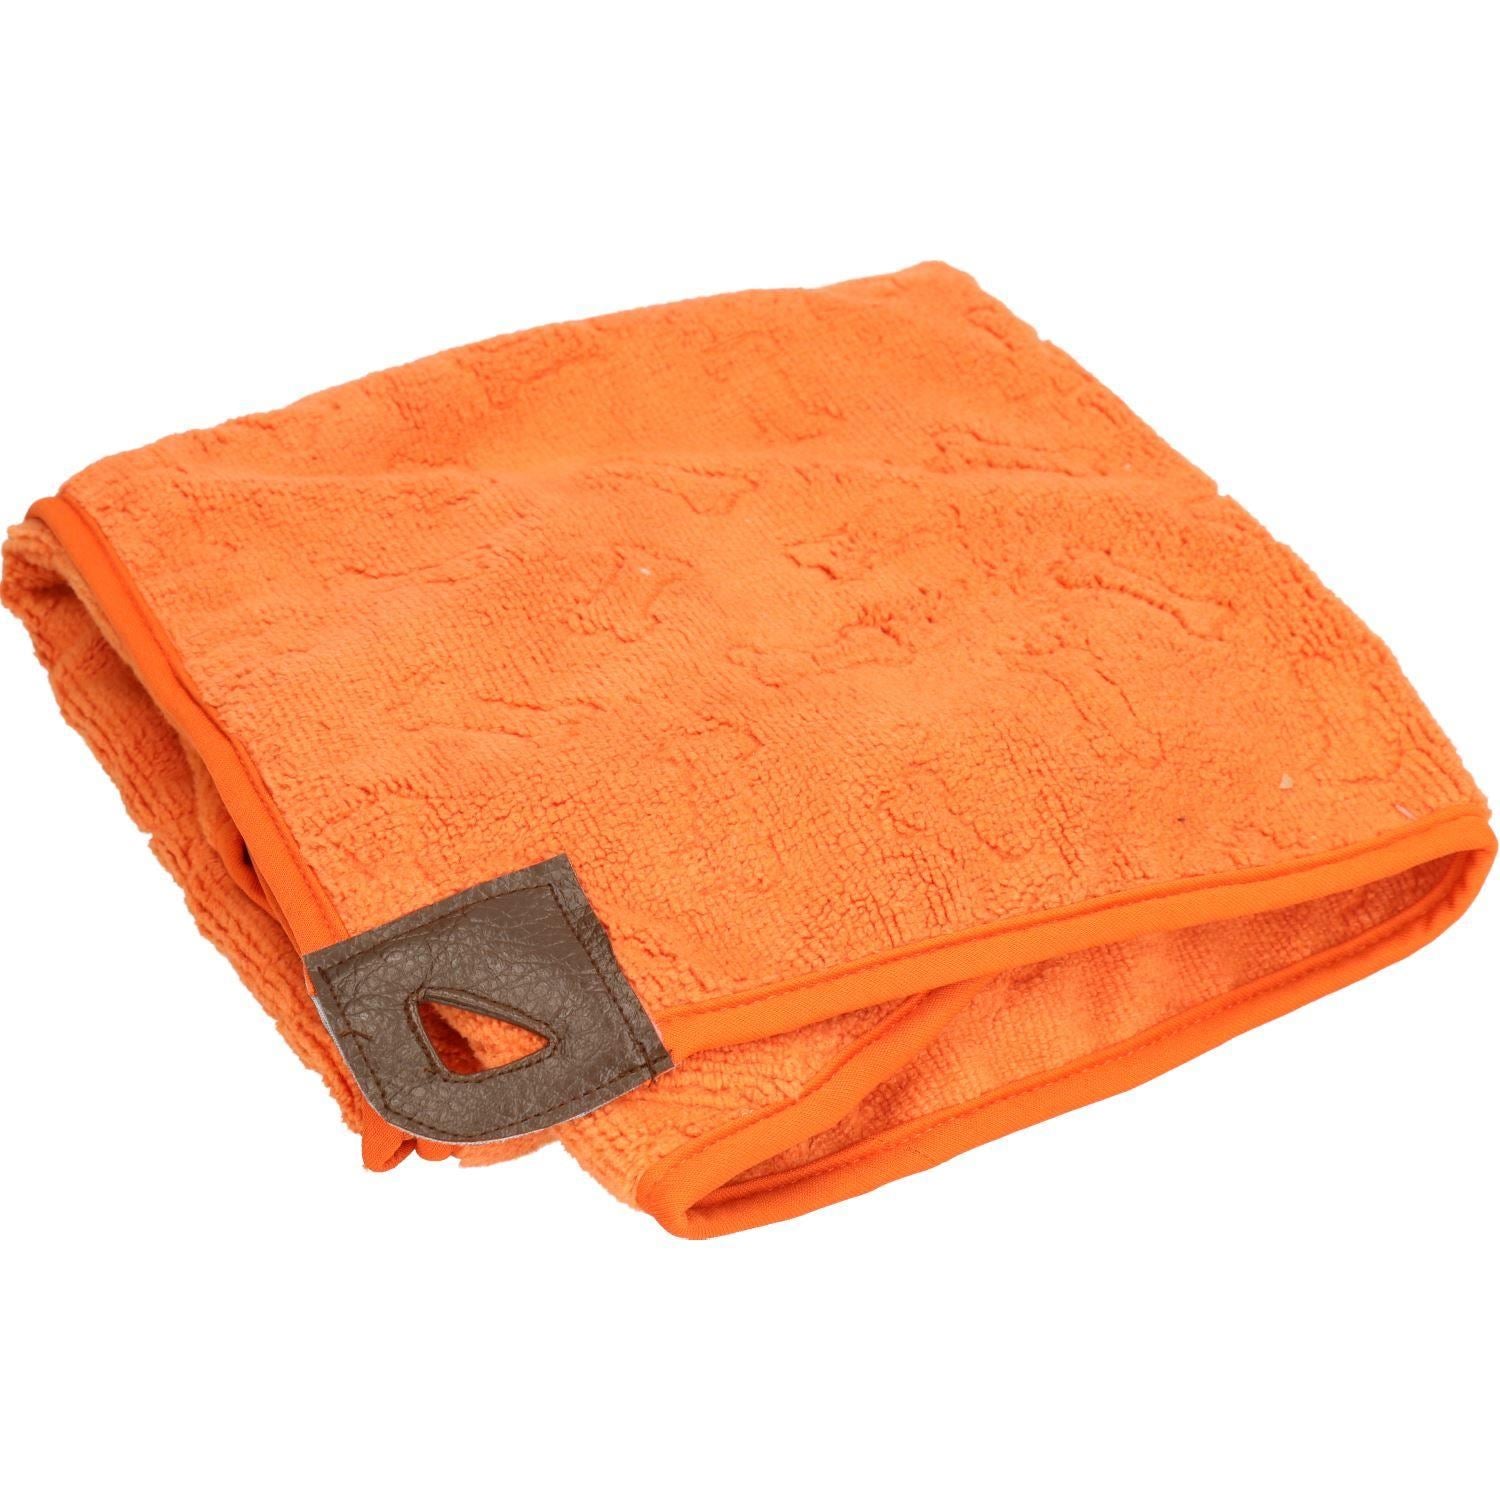 Tall Tails Orange Pet Dog Cape Pocket Towel Large 27"x27" 2Pack